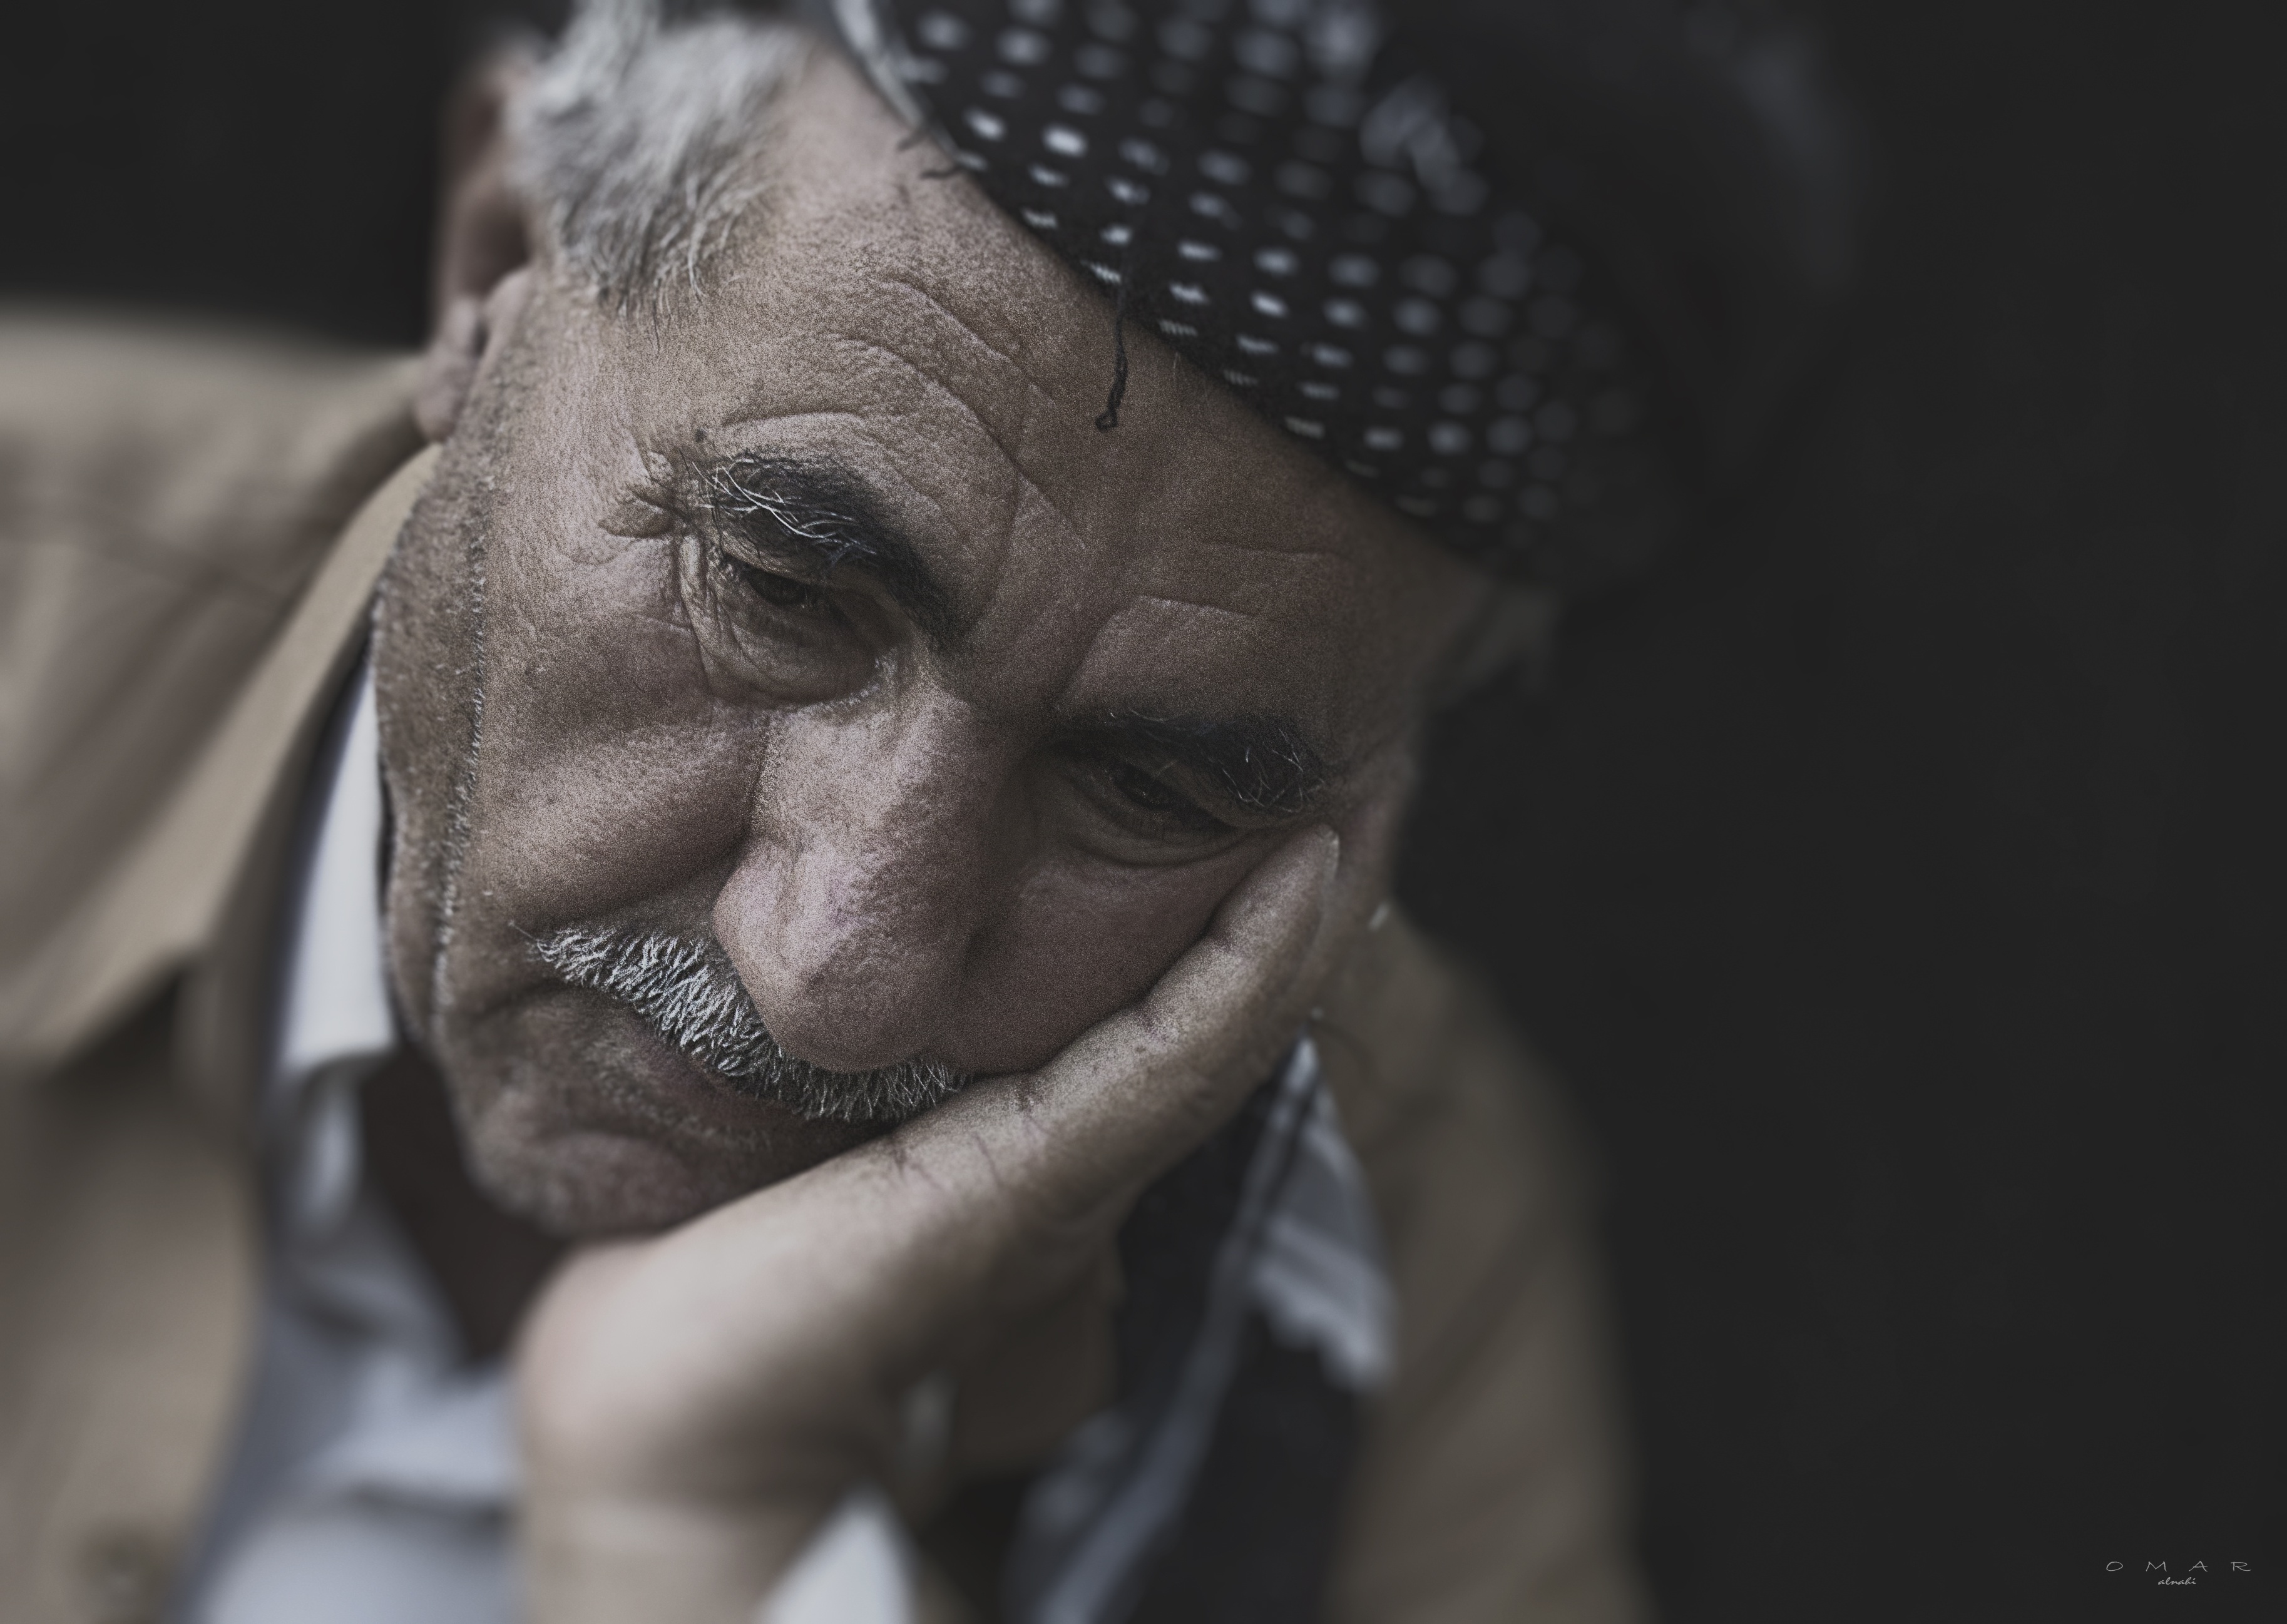 Elderly man resting his head in his hand, looking forlorn.